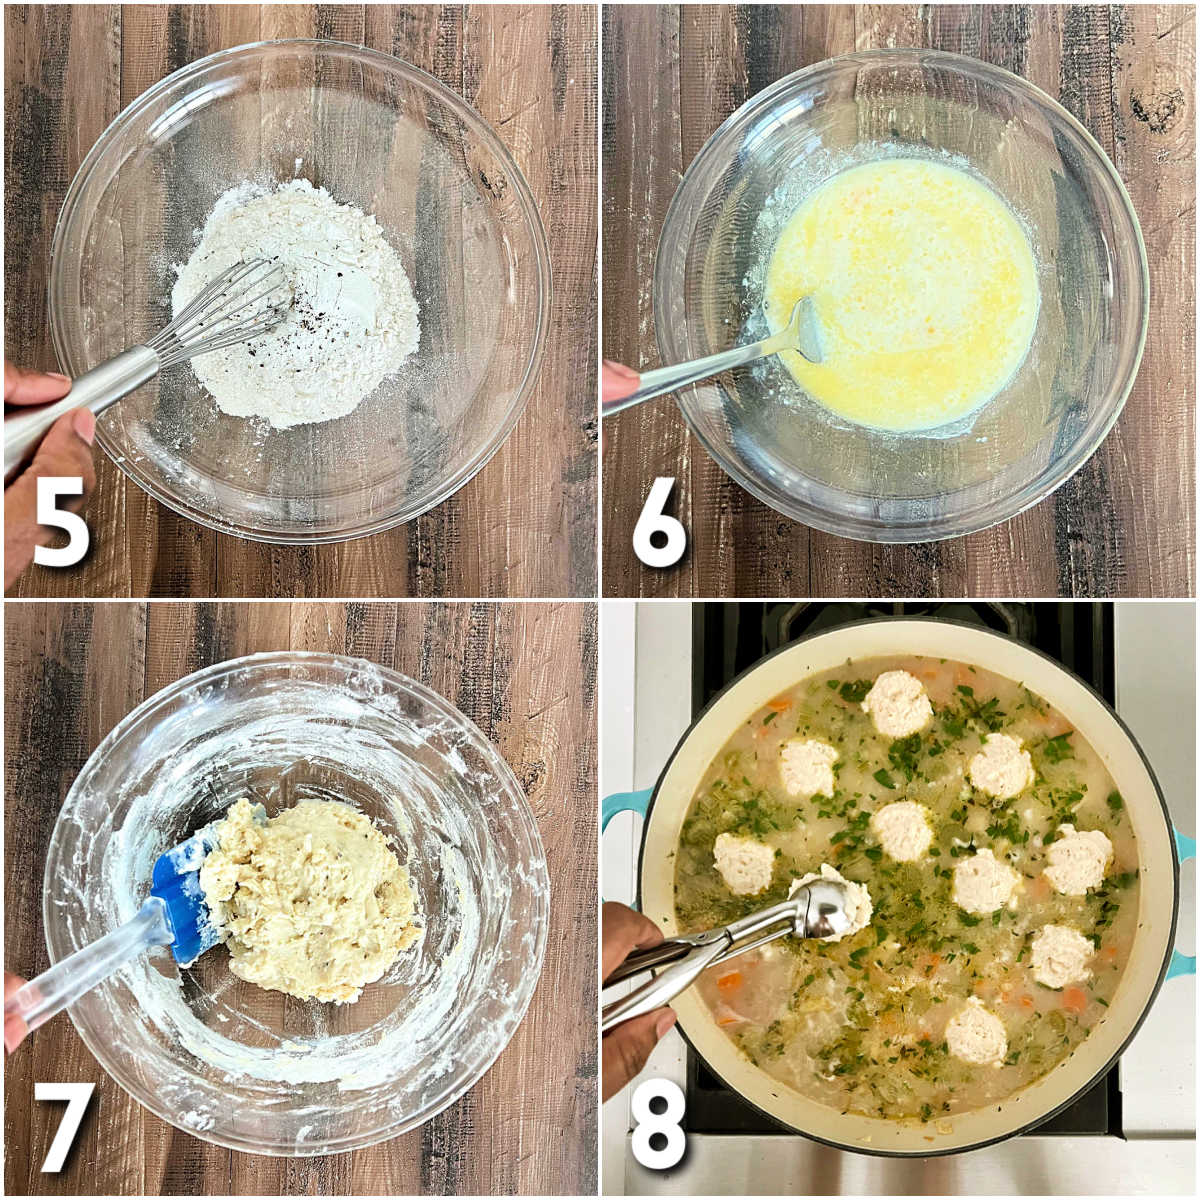 Steps 5-8 for making Chicken and Dumplings